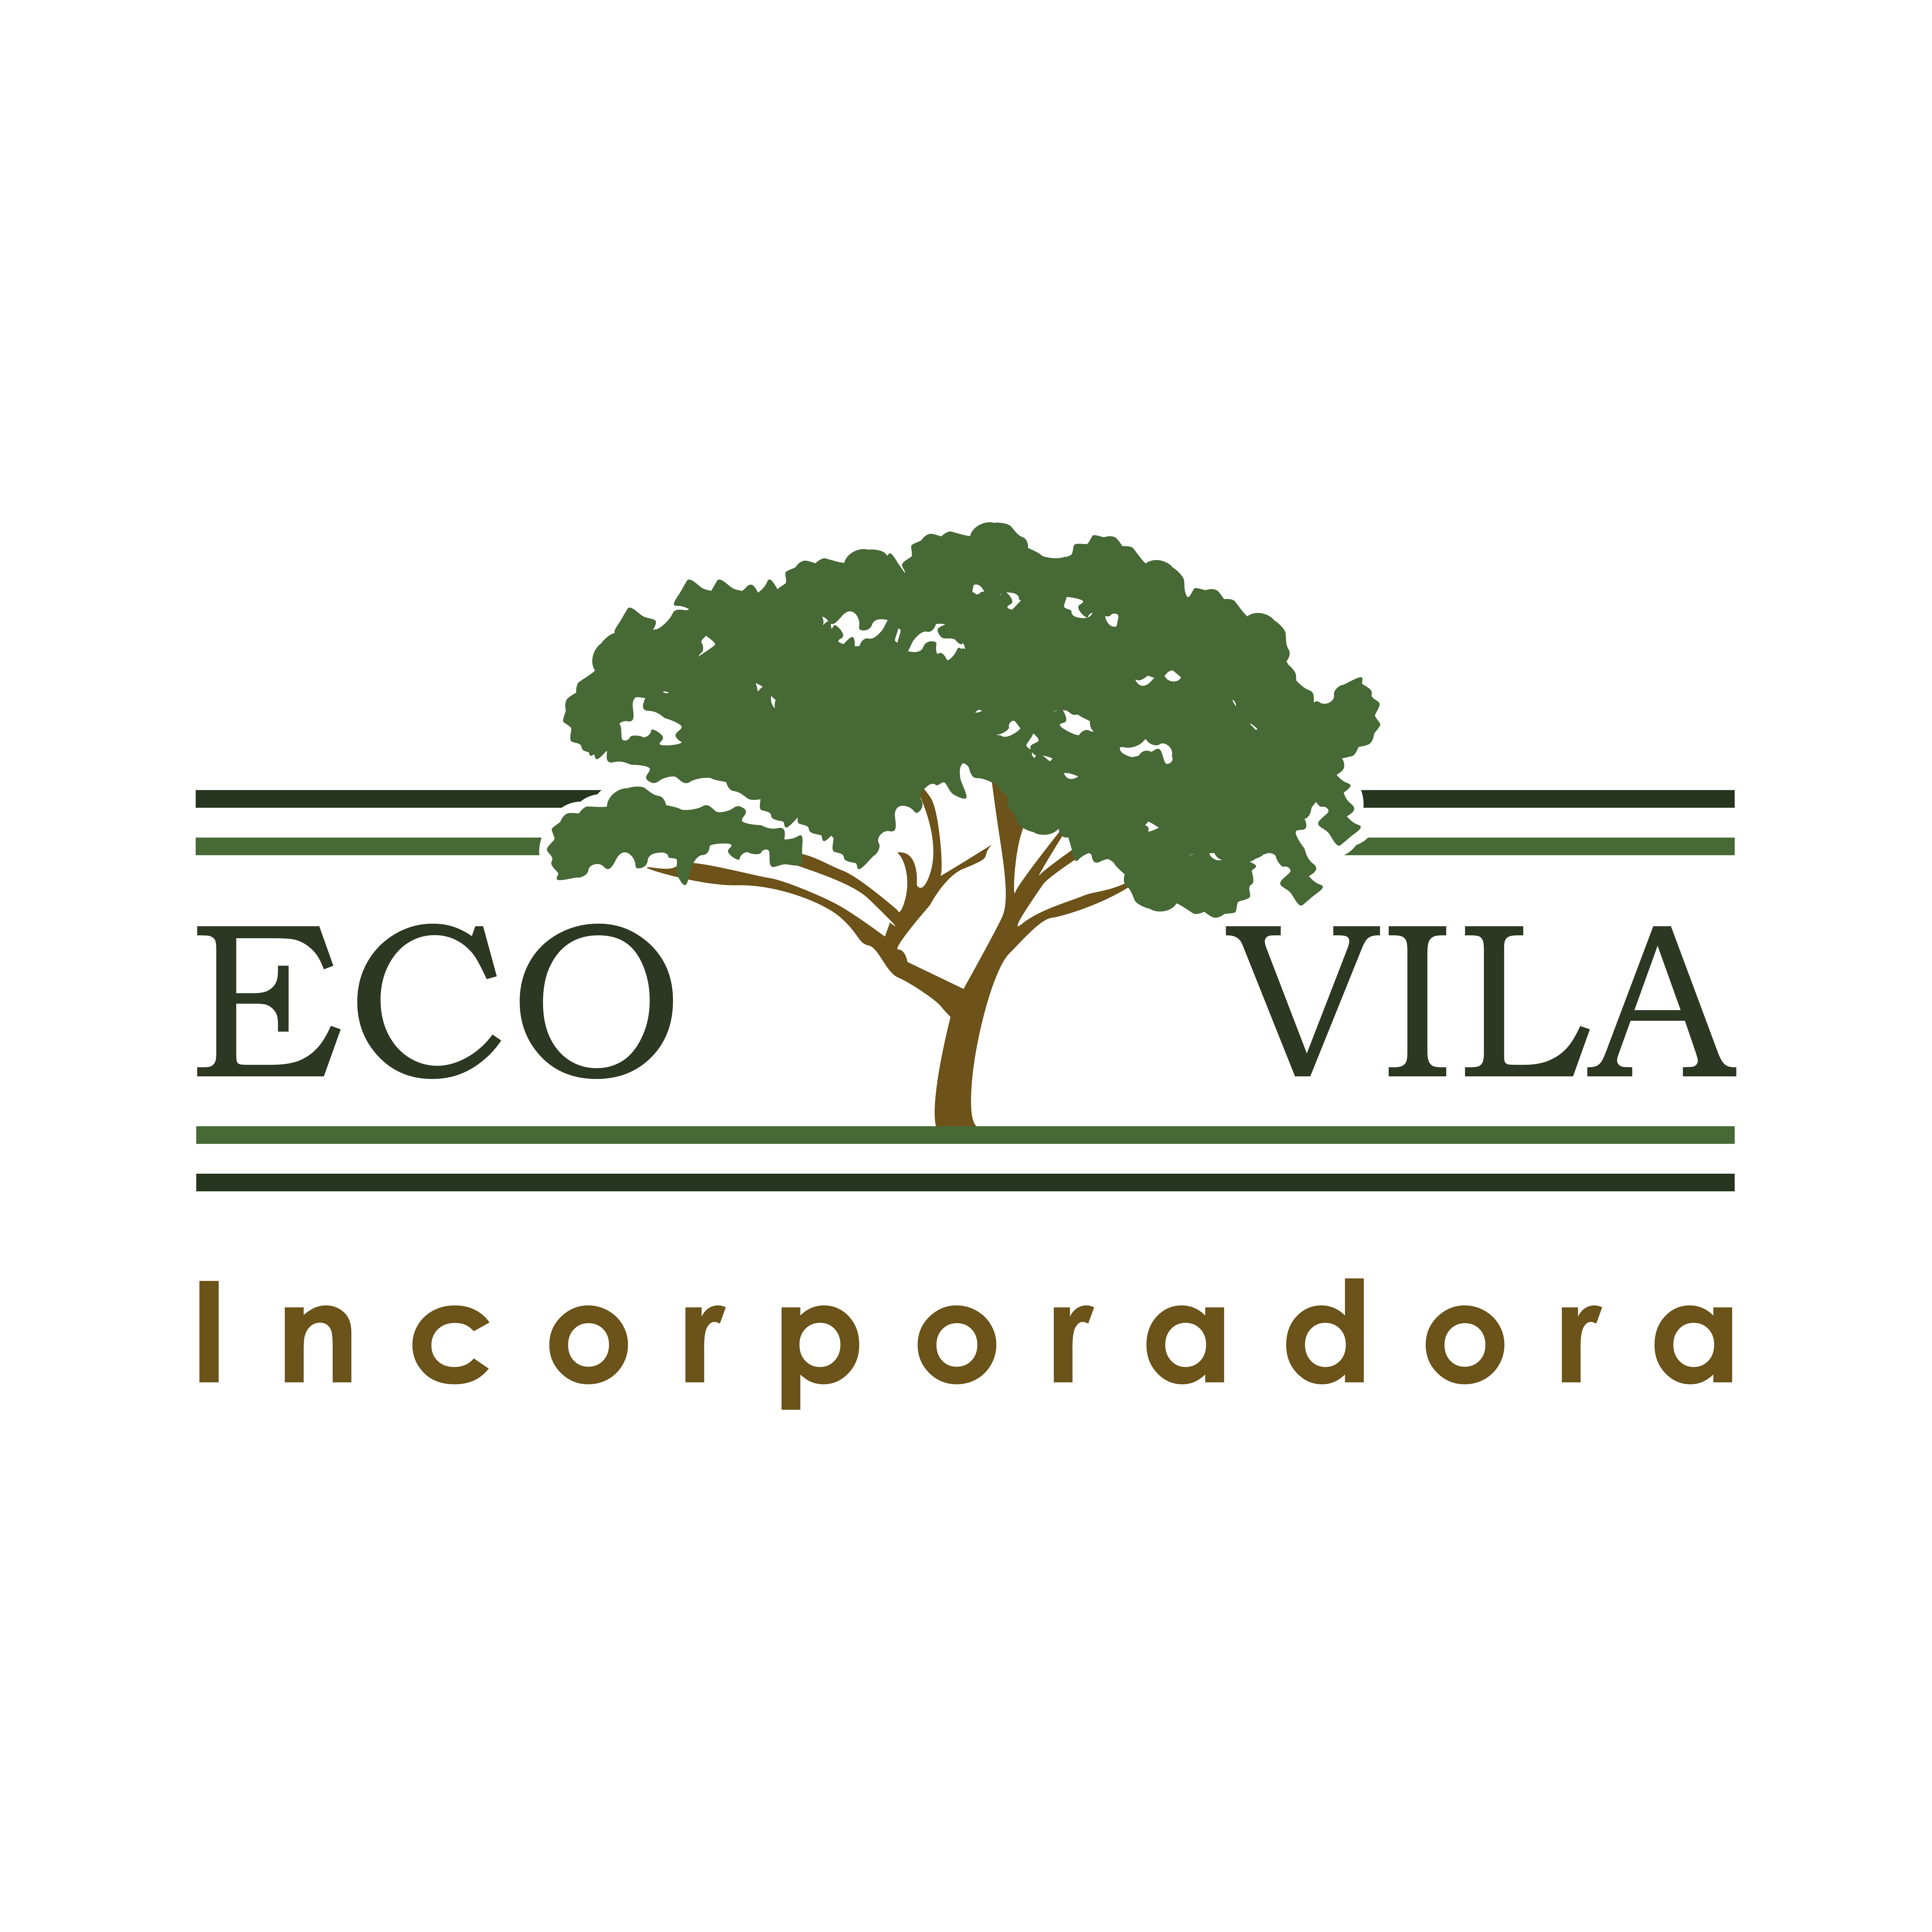 Logo Eco vila incorporadora